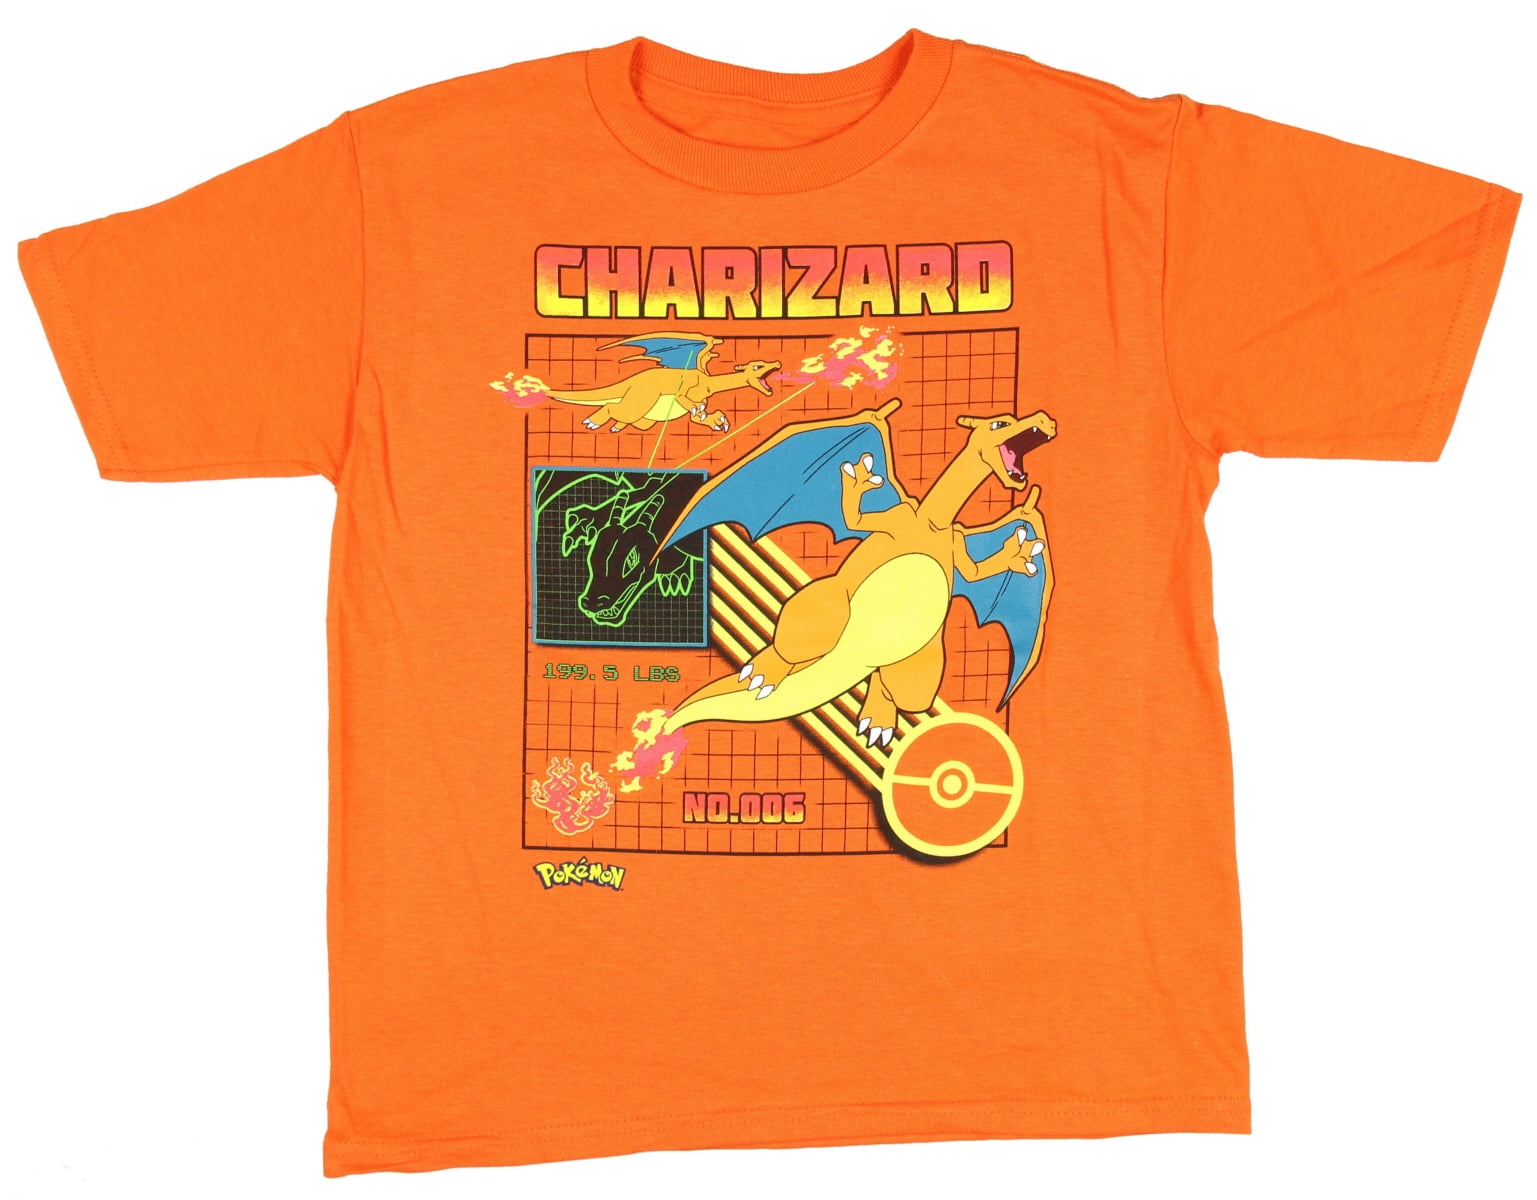 Charizard Shirt